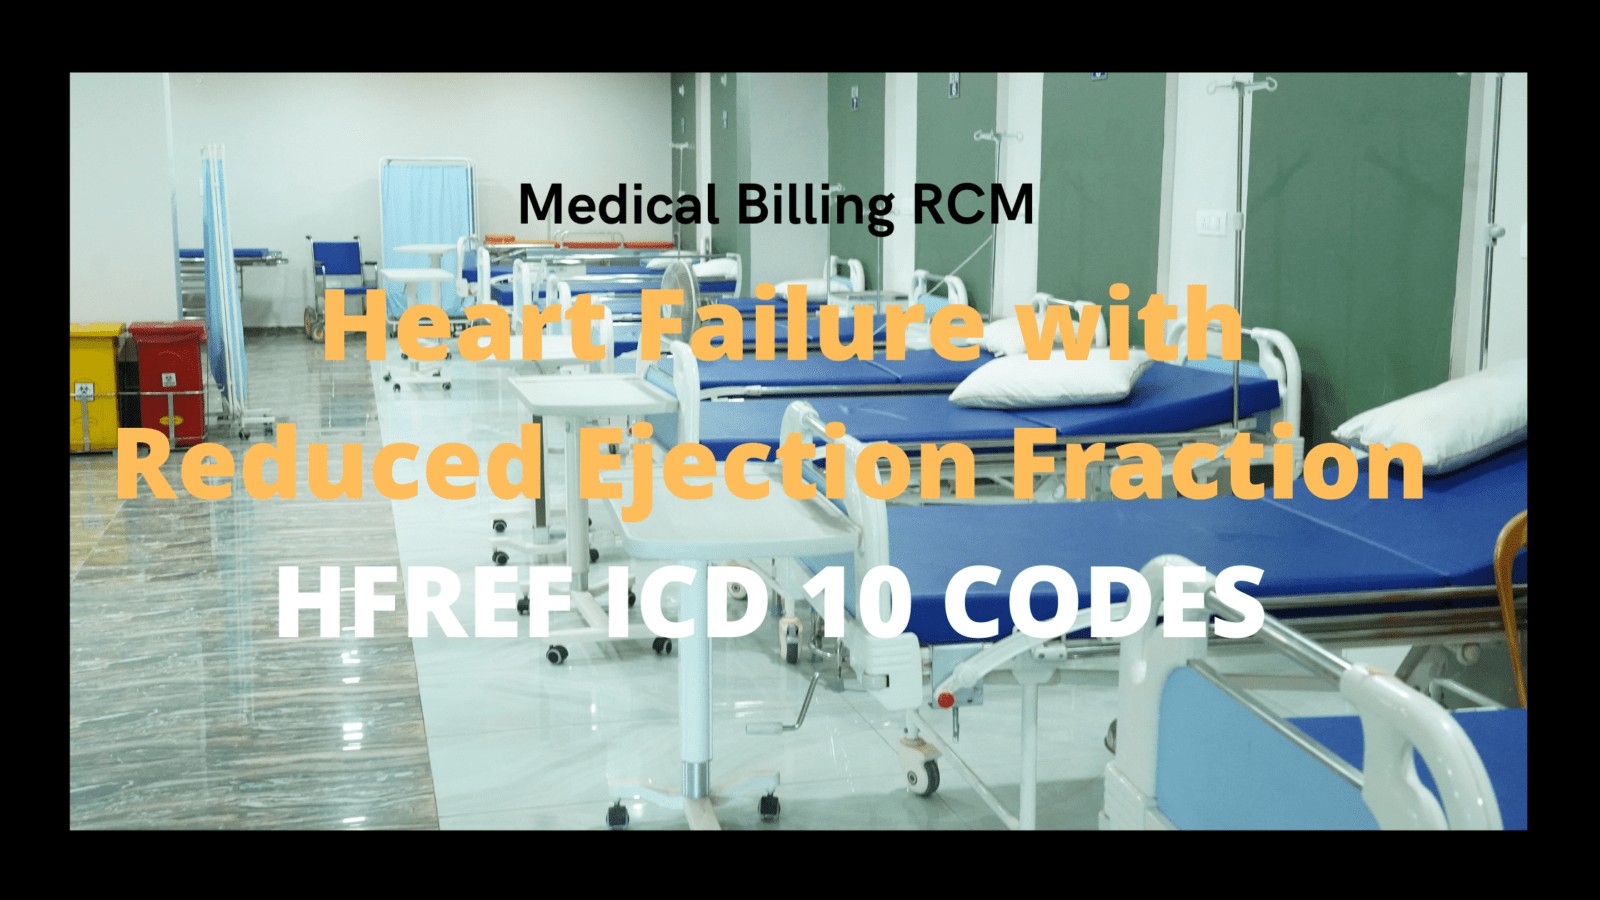 HFREF ICD-10 Codes